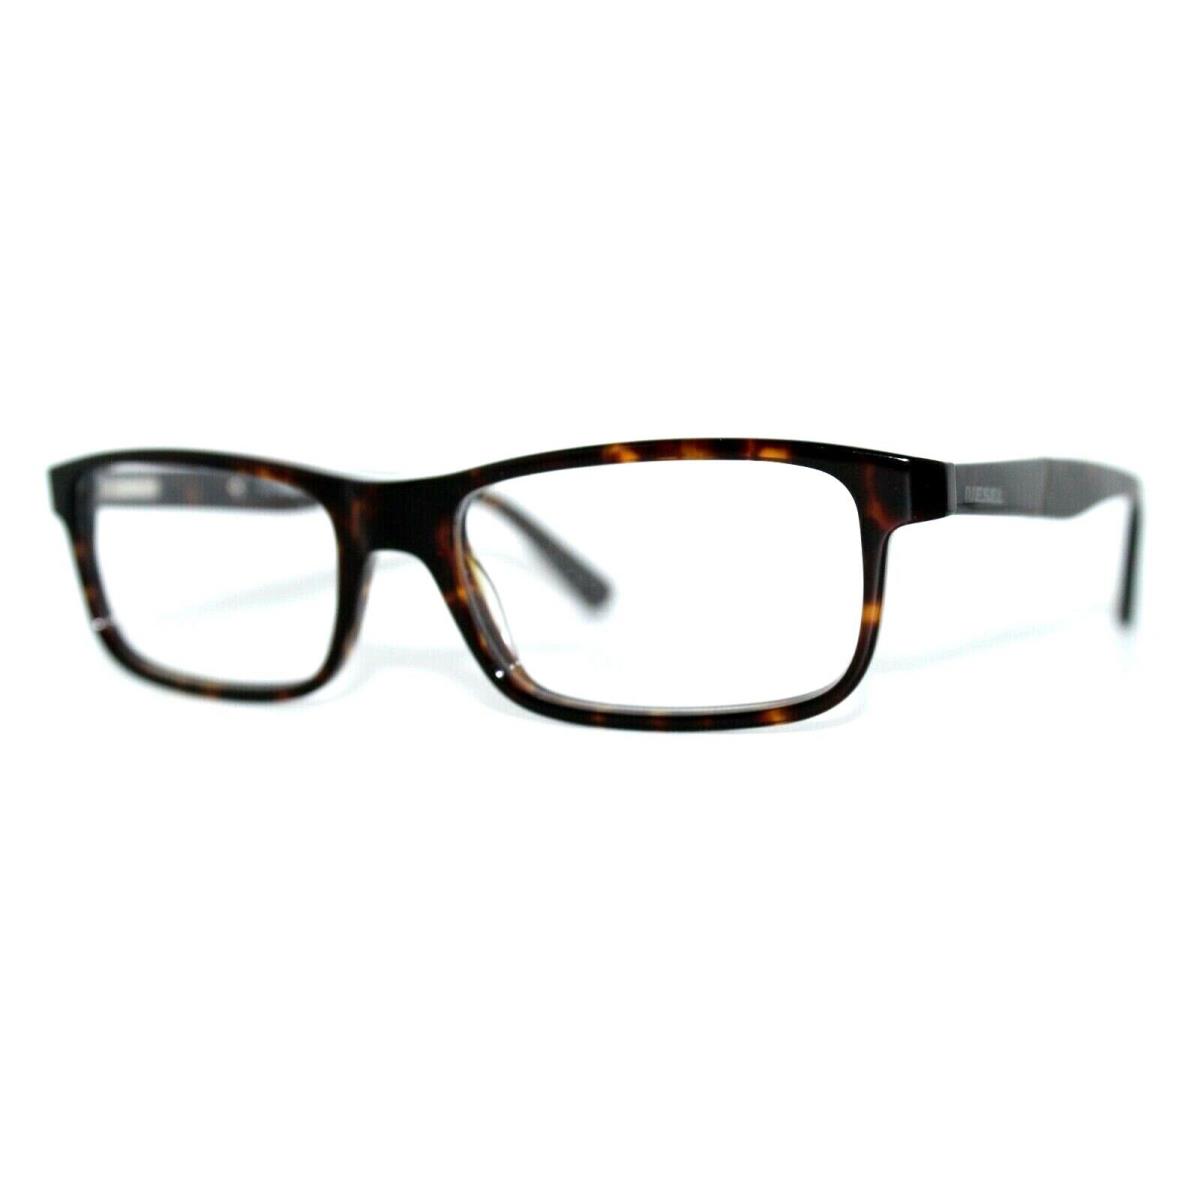 Diesel DL5292 052 Tortoise Eyeglasses Frames 54-17-145MM W/case